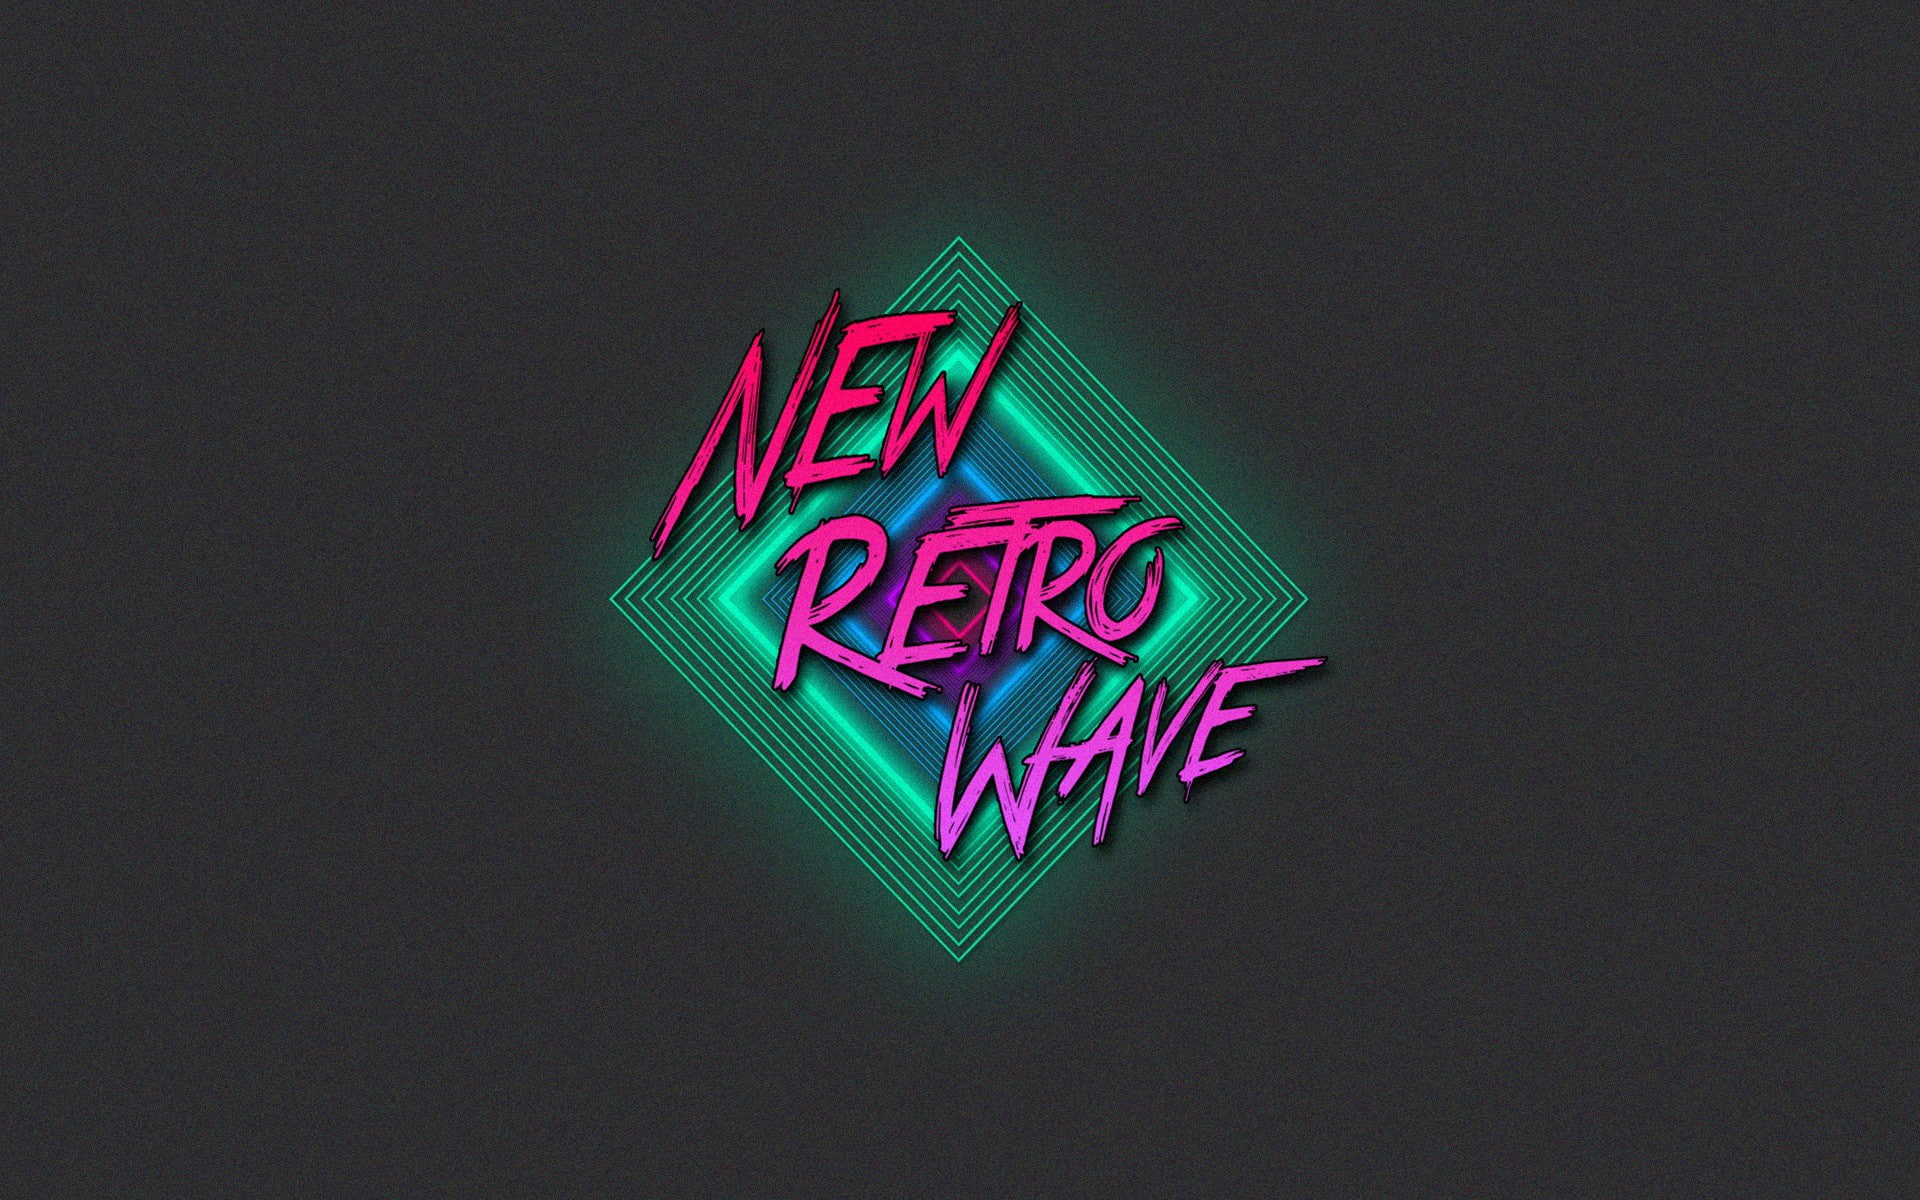 retro games, vintage, New Retro Wave, neon, 1980s, synthwave